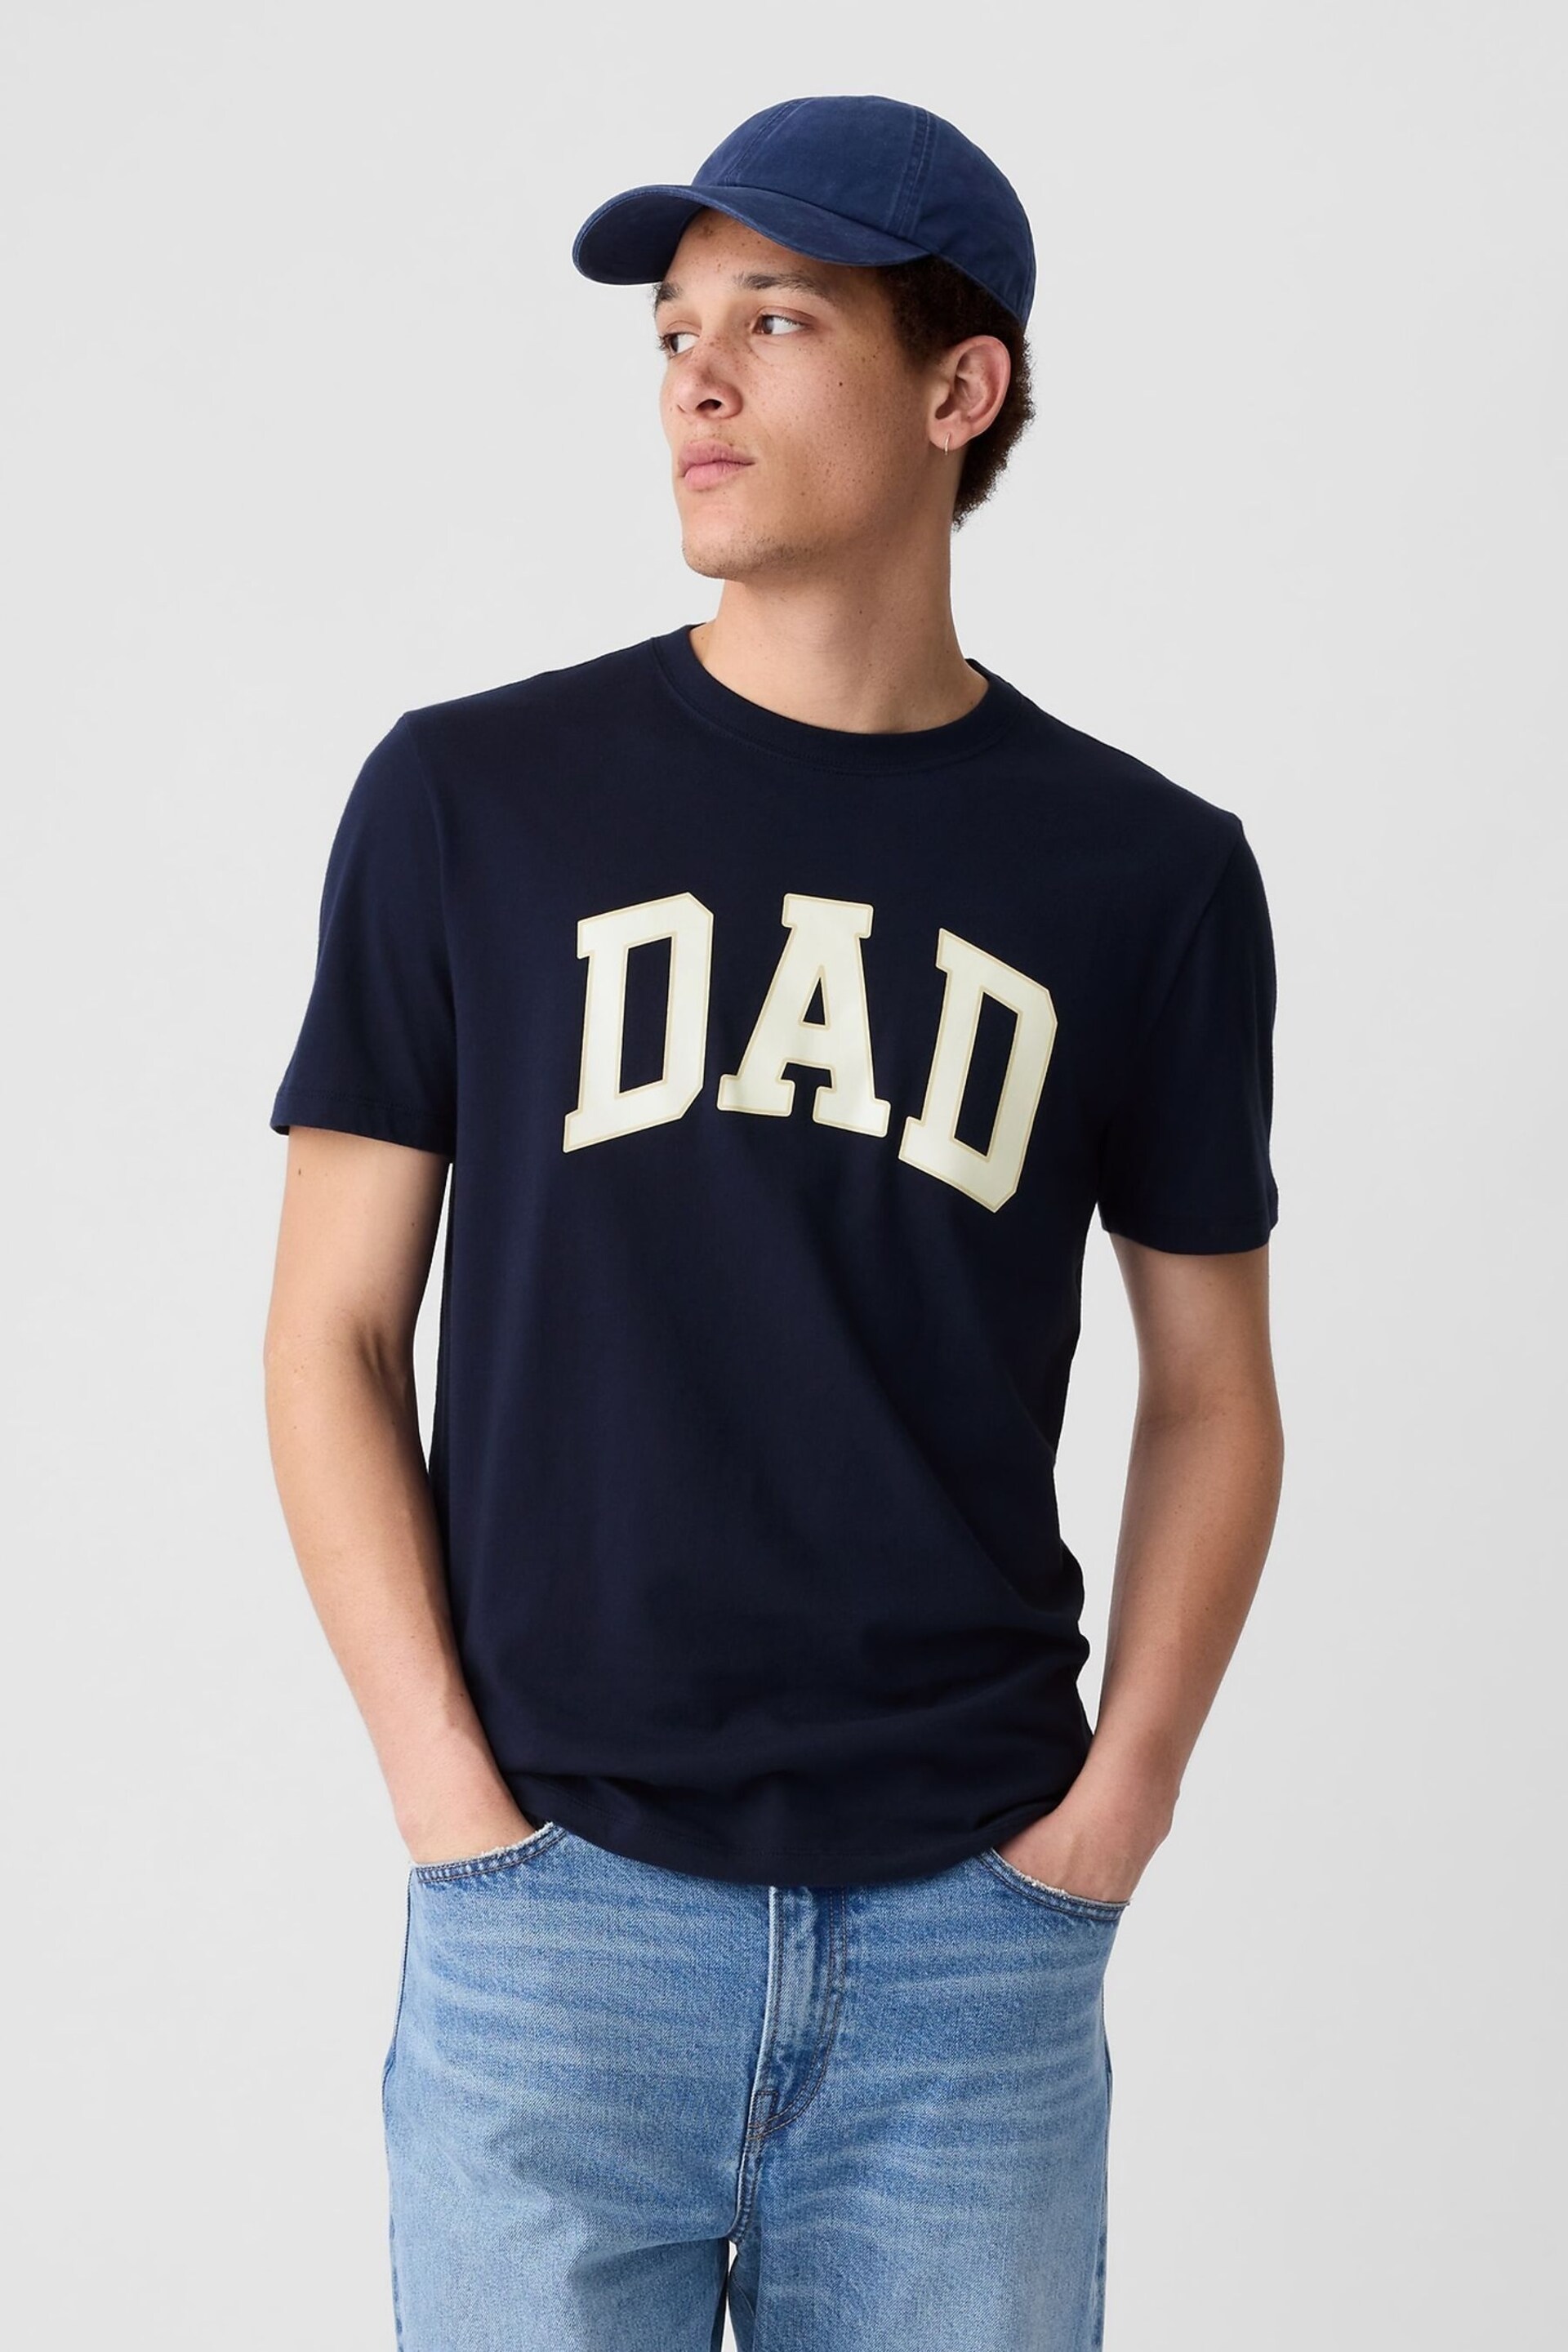 Gap Navy Blue Everyday Soft Dad Graphic Short Sleeve Crew Neck T-Shirt - Image 1 of 3